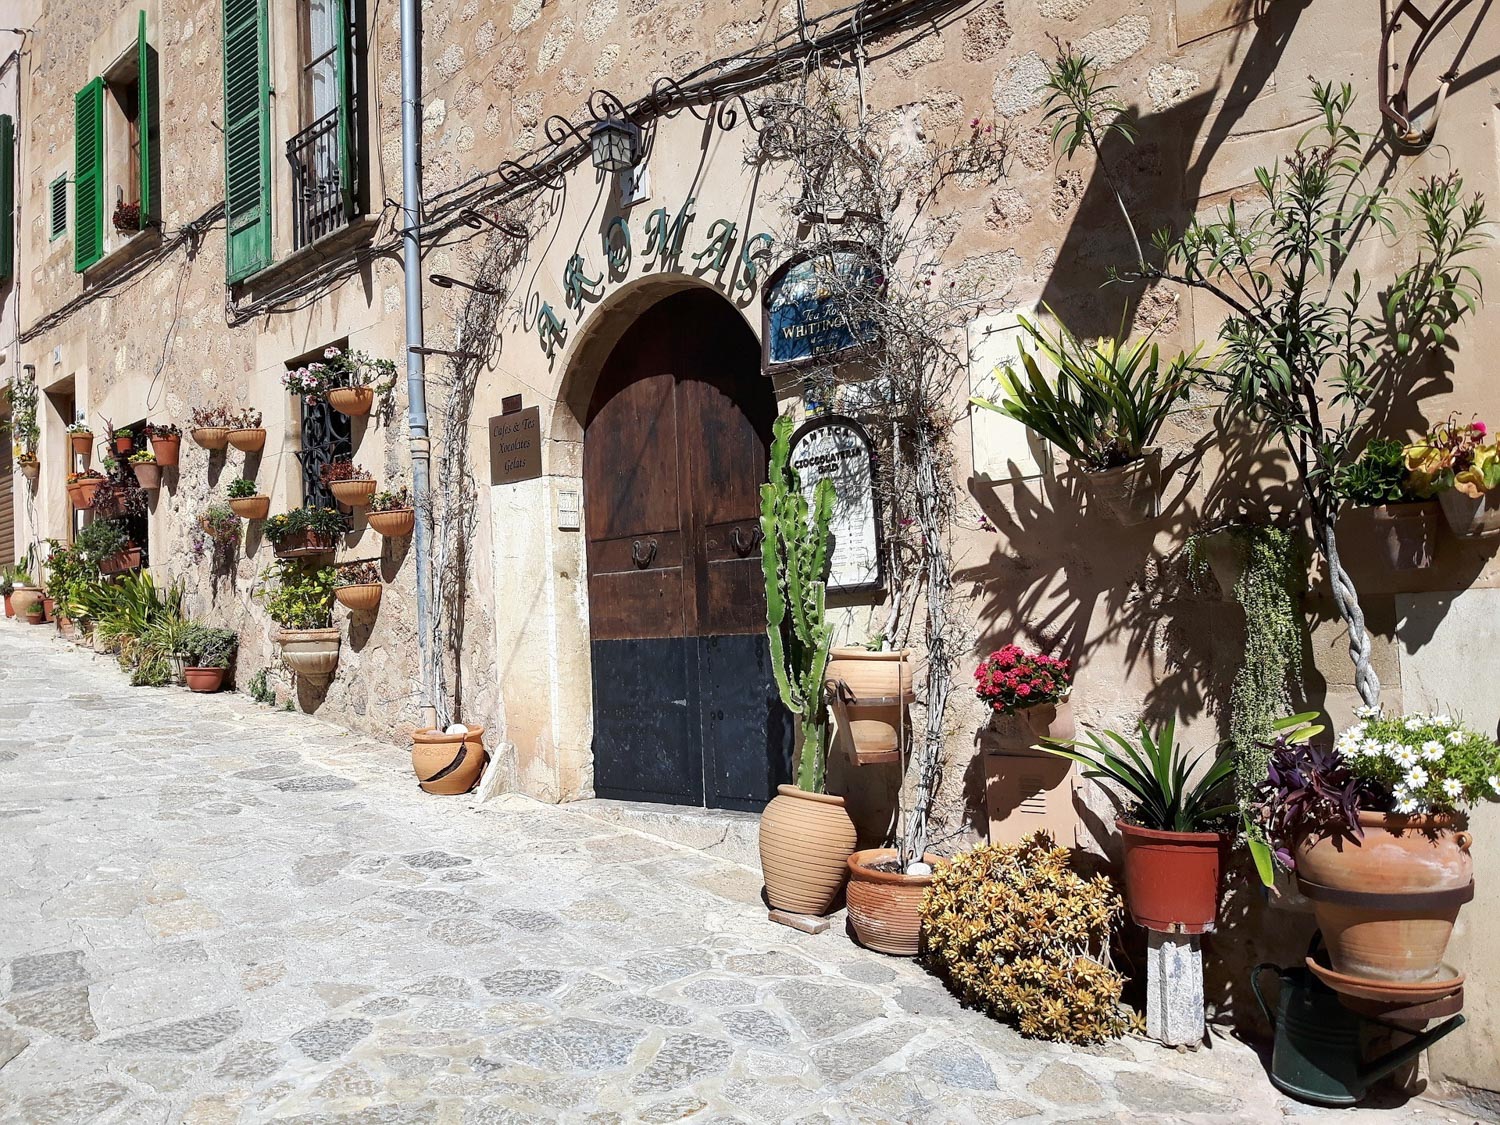 Valldemossa in Mallorca Photo: Fred Lange on Pixabay